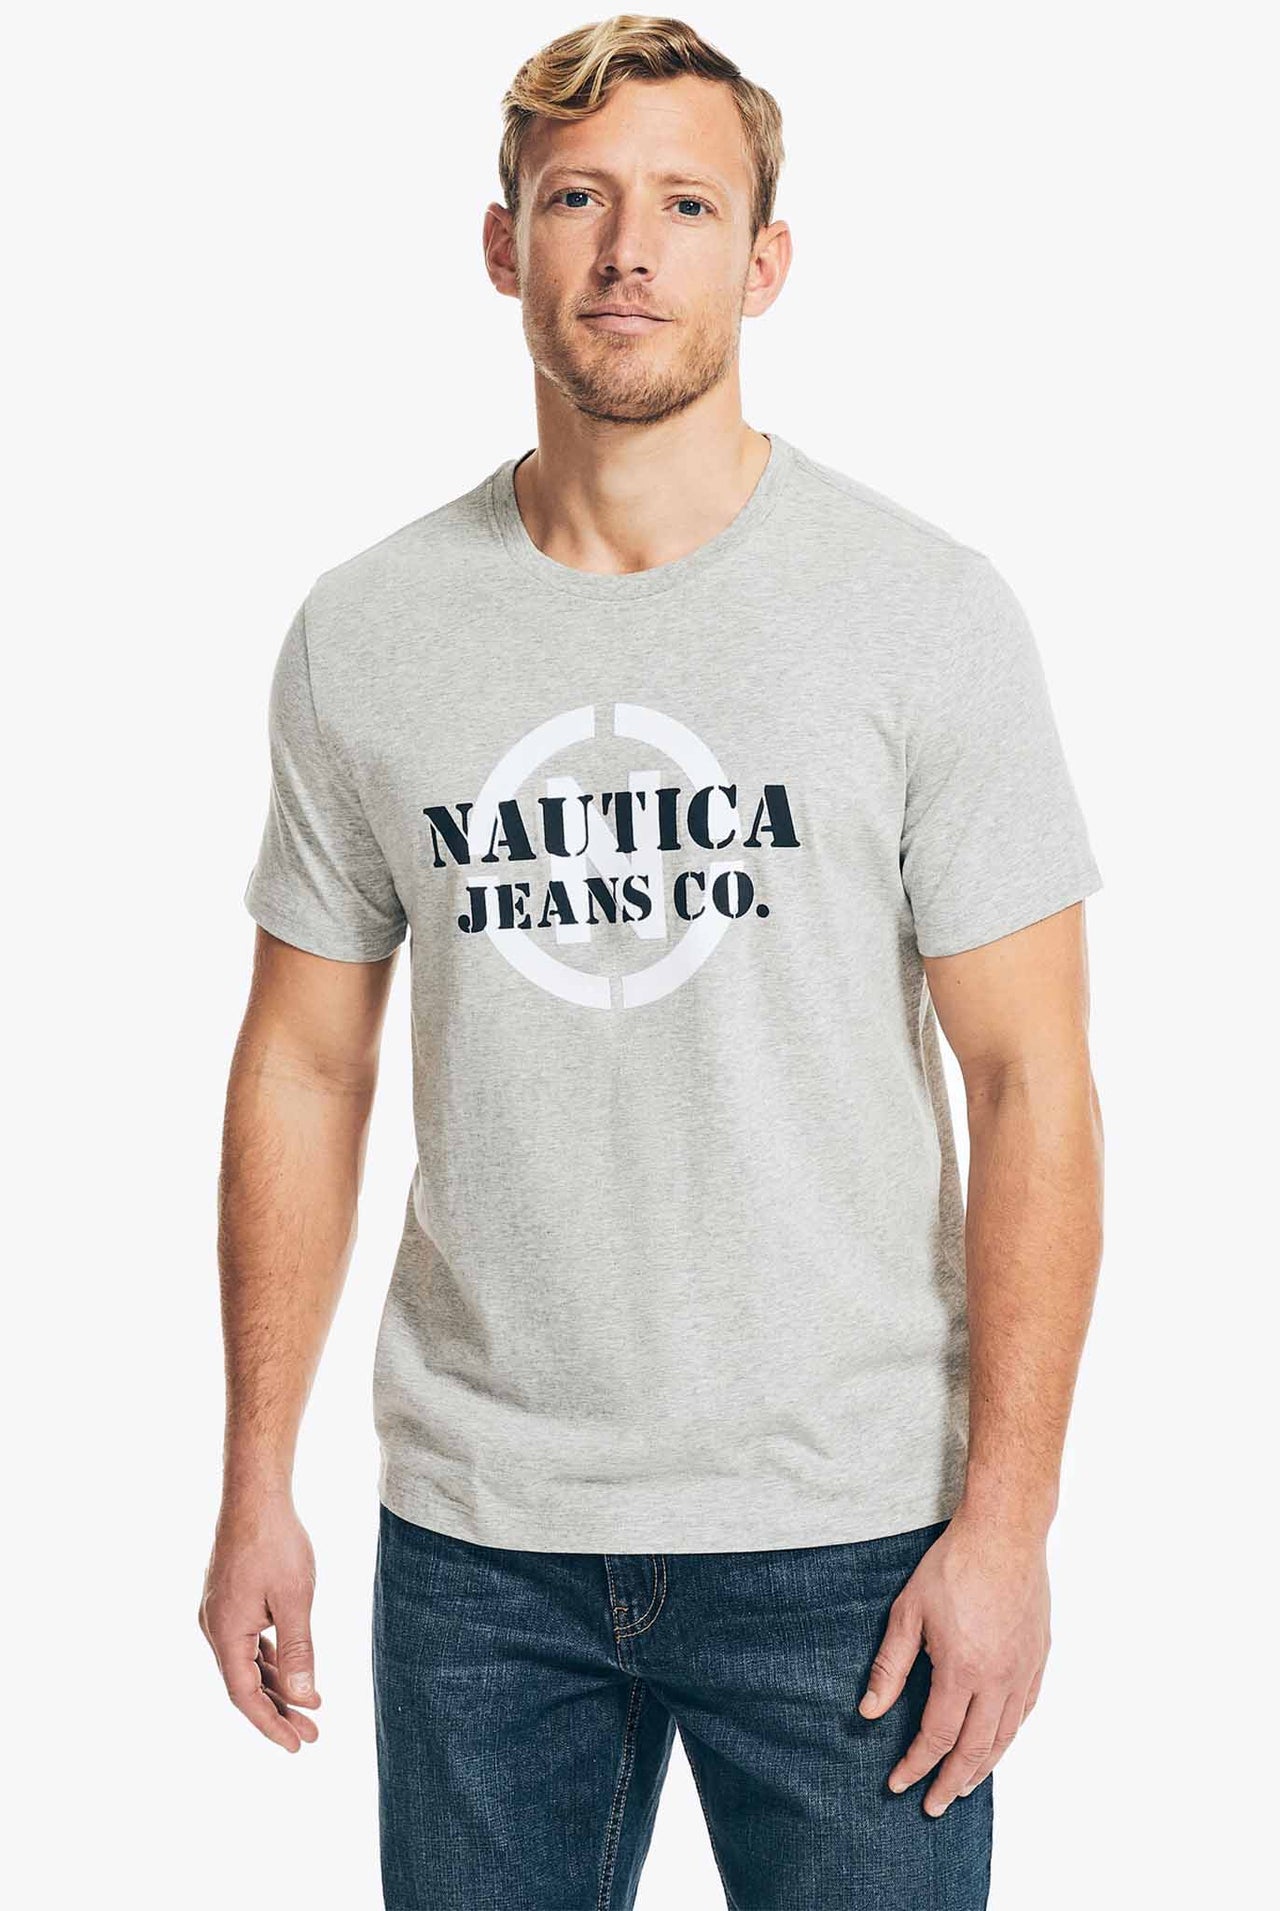 Camiseta Nautica Jeans Co